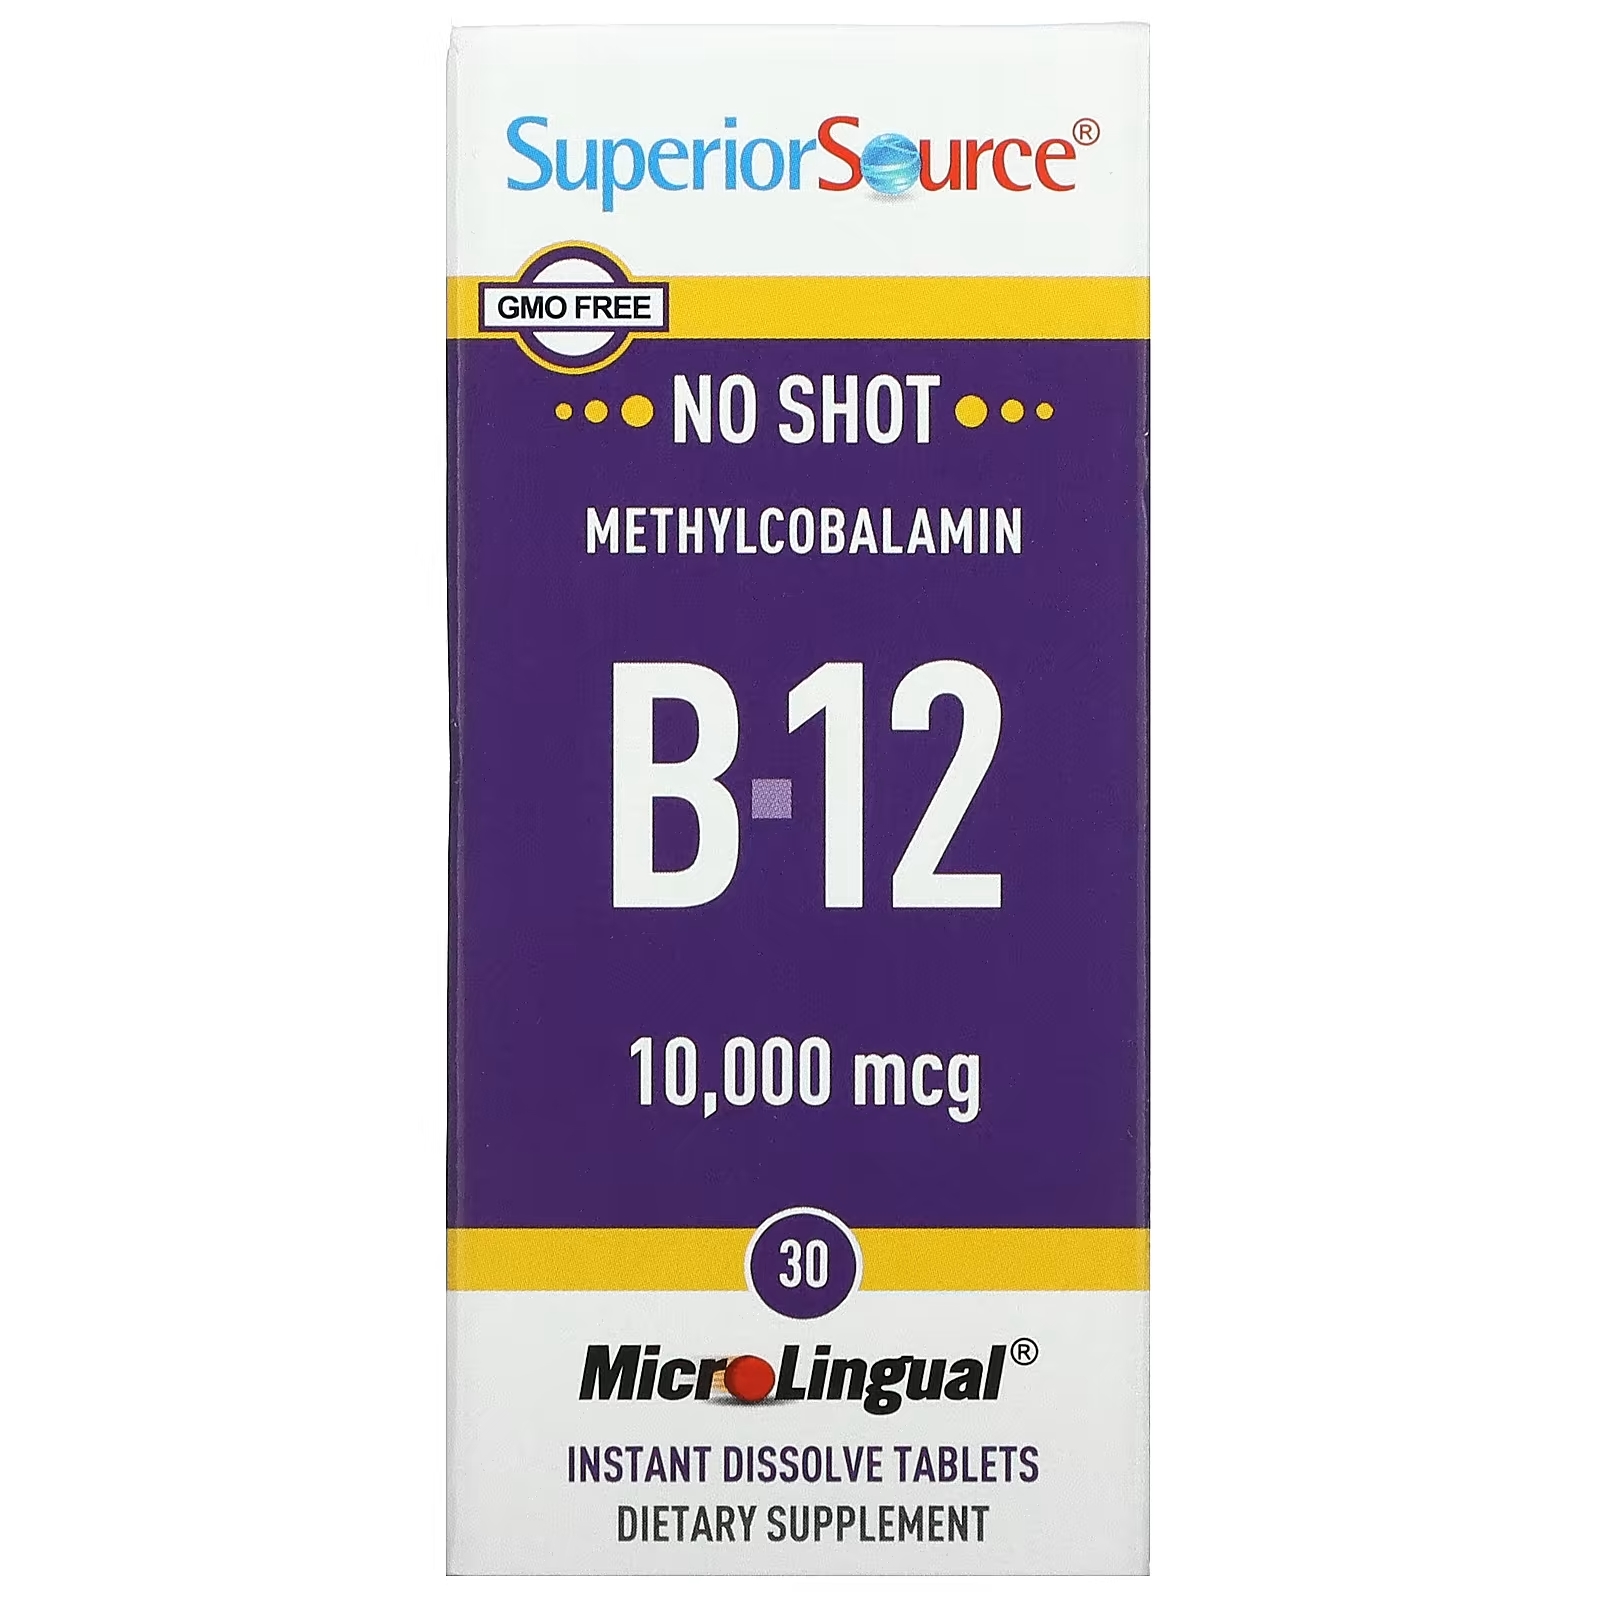 Superior Source метилкобаламин B12 10 000 мкг, 30 таблеток superior source метилкобаламин b 12 10000 мкг 30 микролингвальных быстрорастворимых таблеток